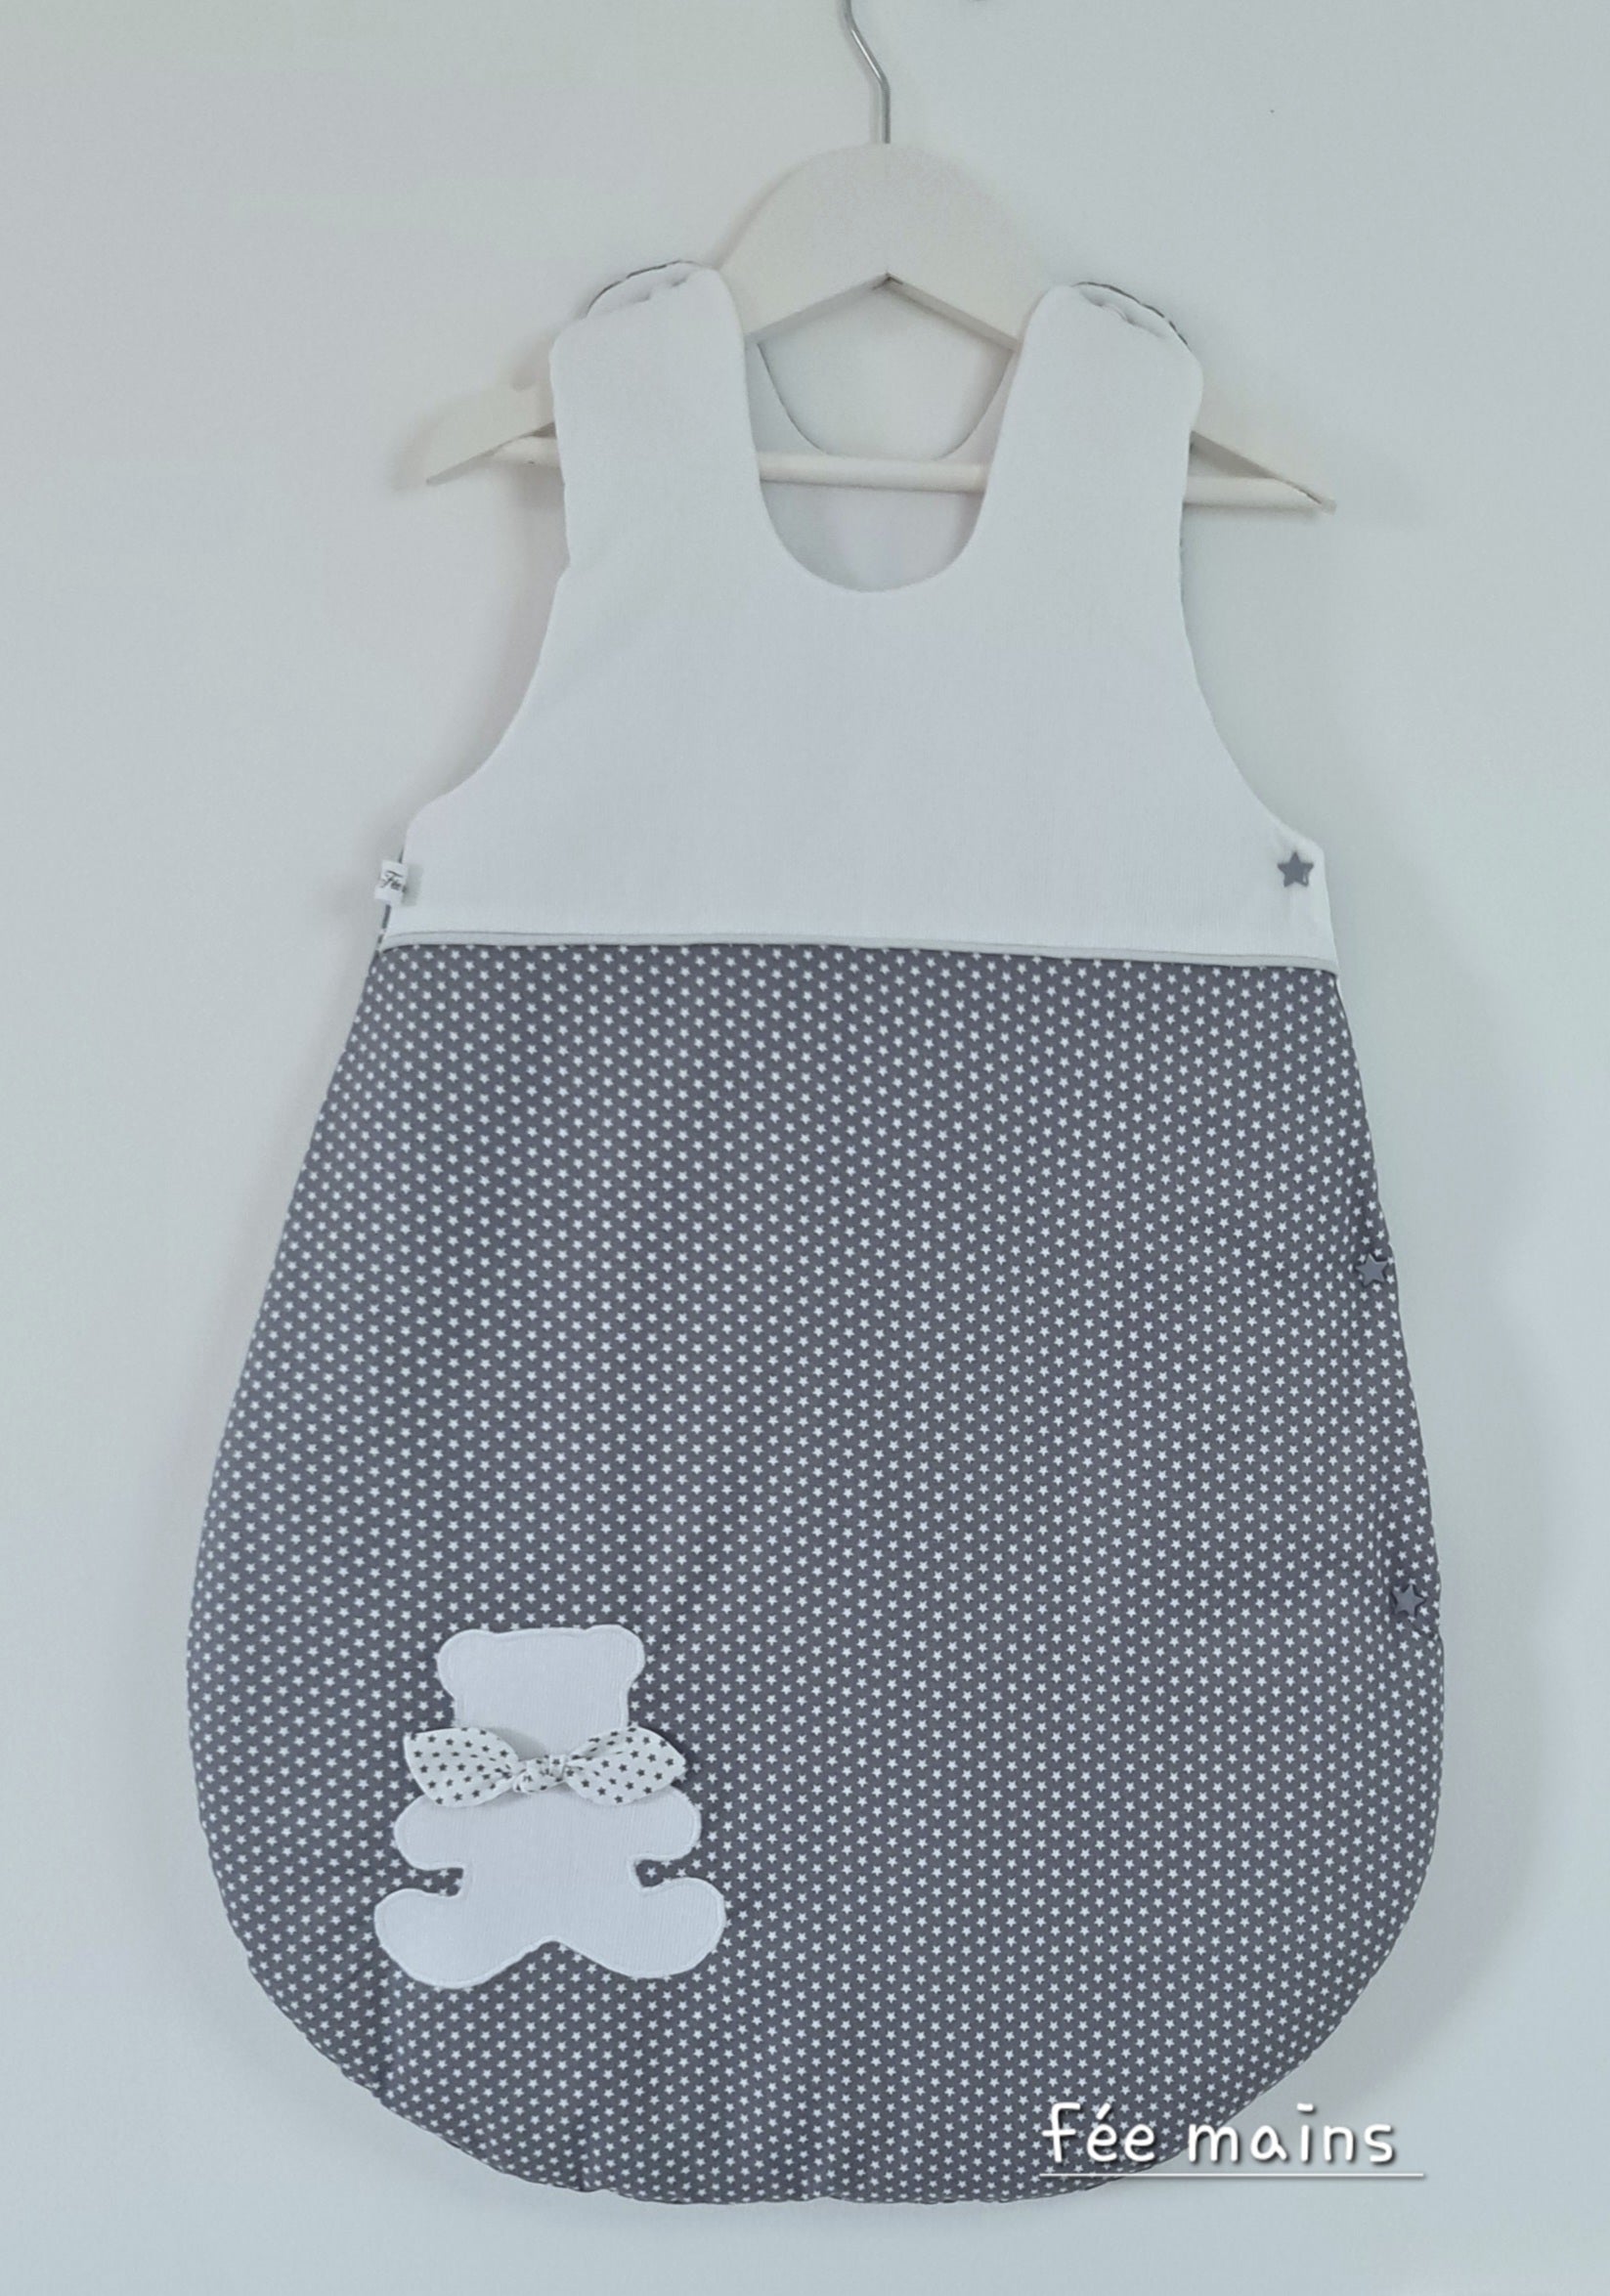 Gigoteuse artisanale française bébé 0-6 mois en coton Oeko-Tex et son ourson.